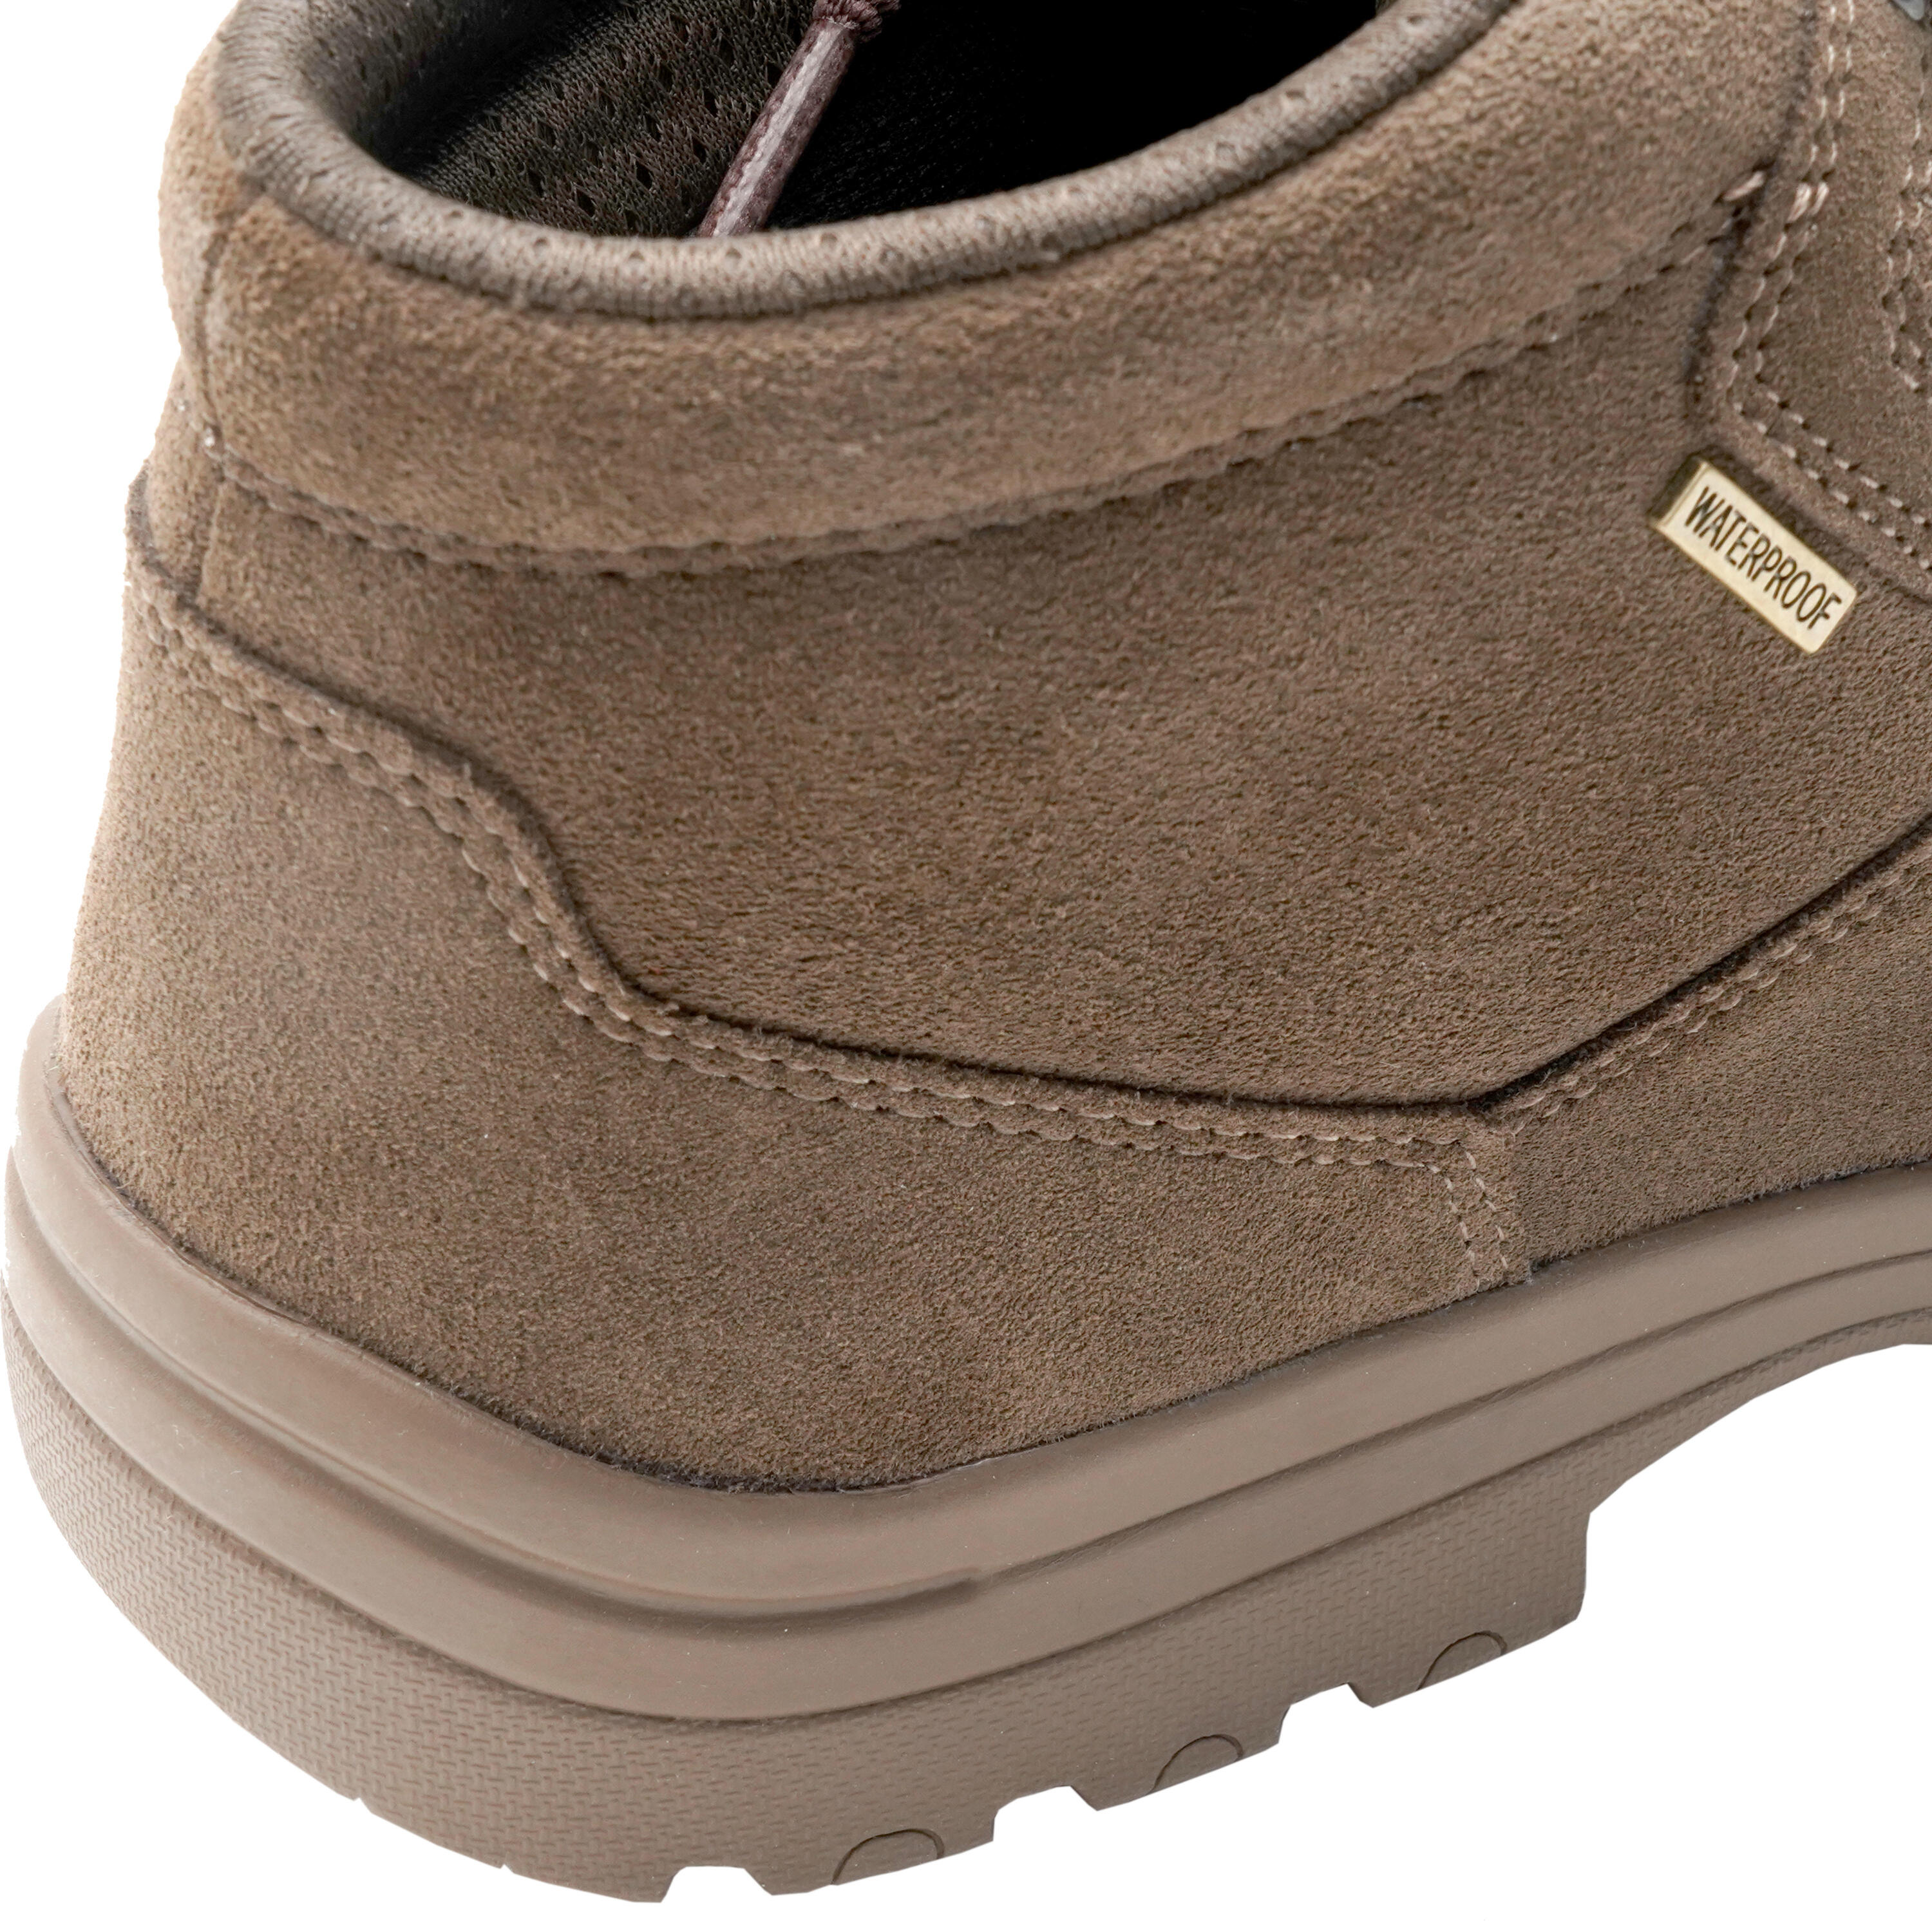 Lightweight Waterproof Shoes - Brown 4/5